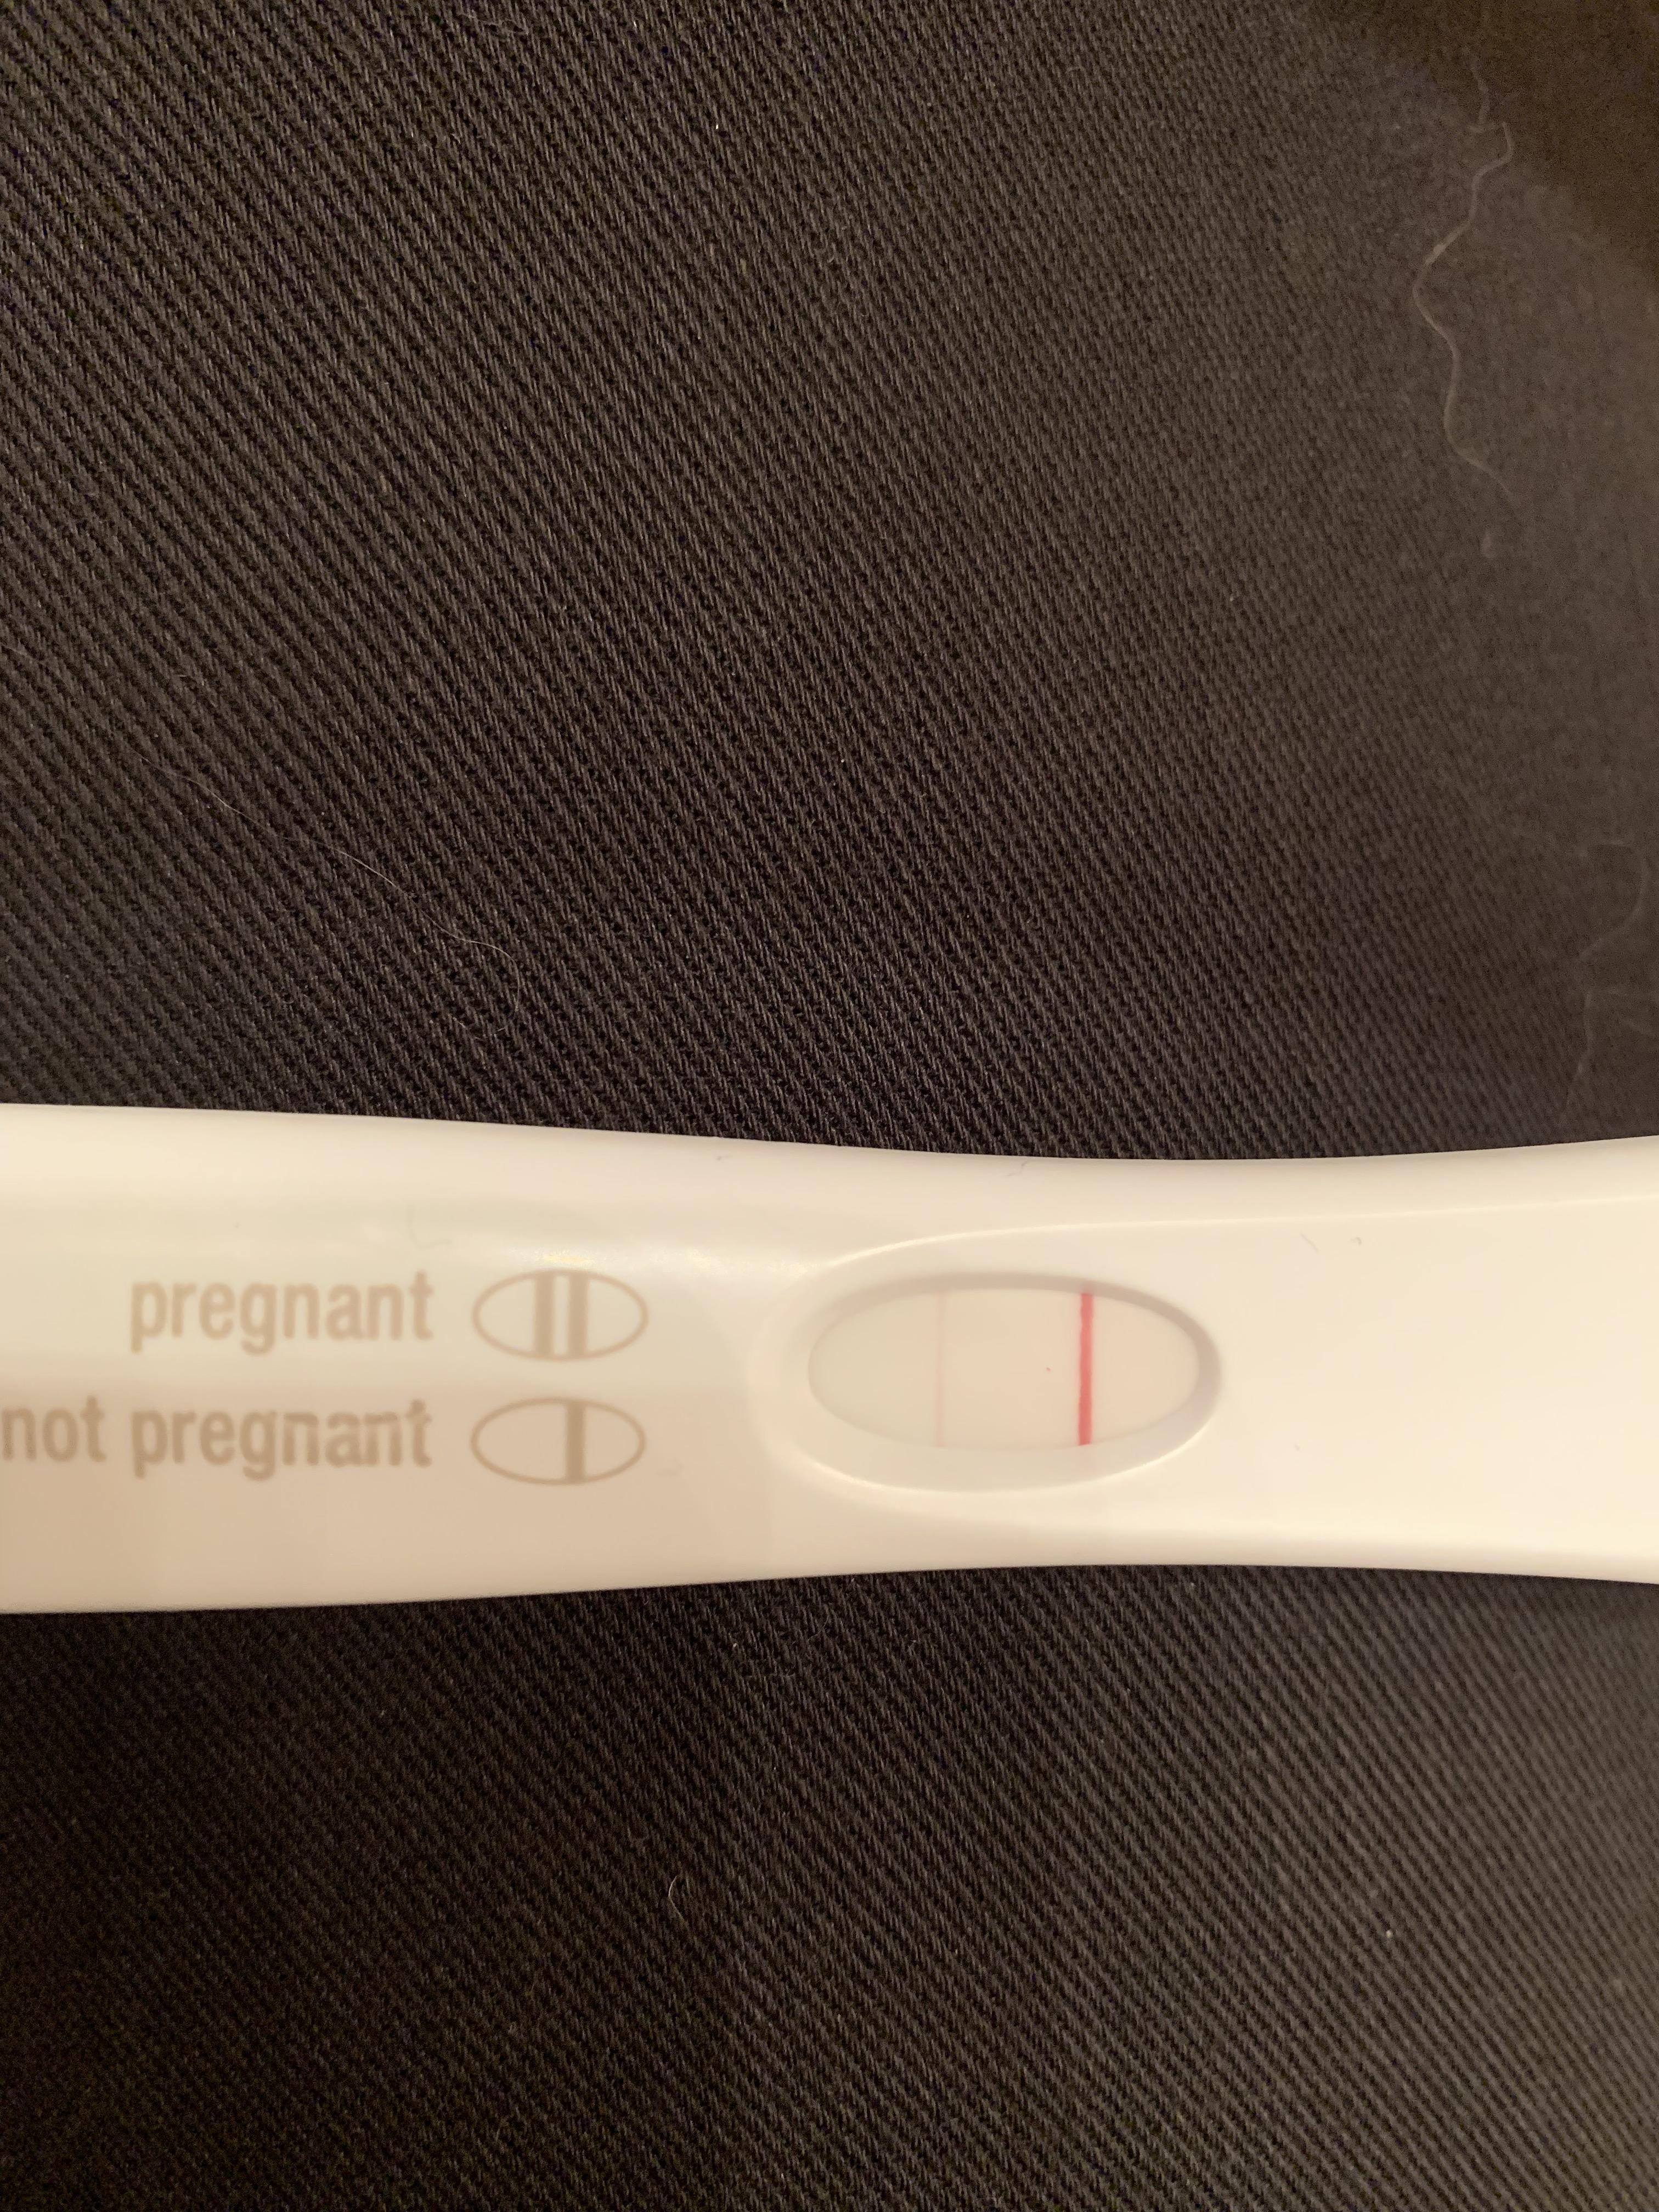 Bfp 6 Days Before Missed Period Pregnancy Test